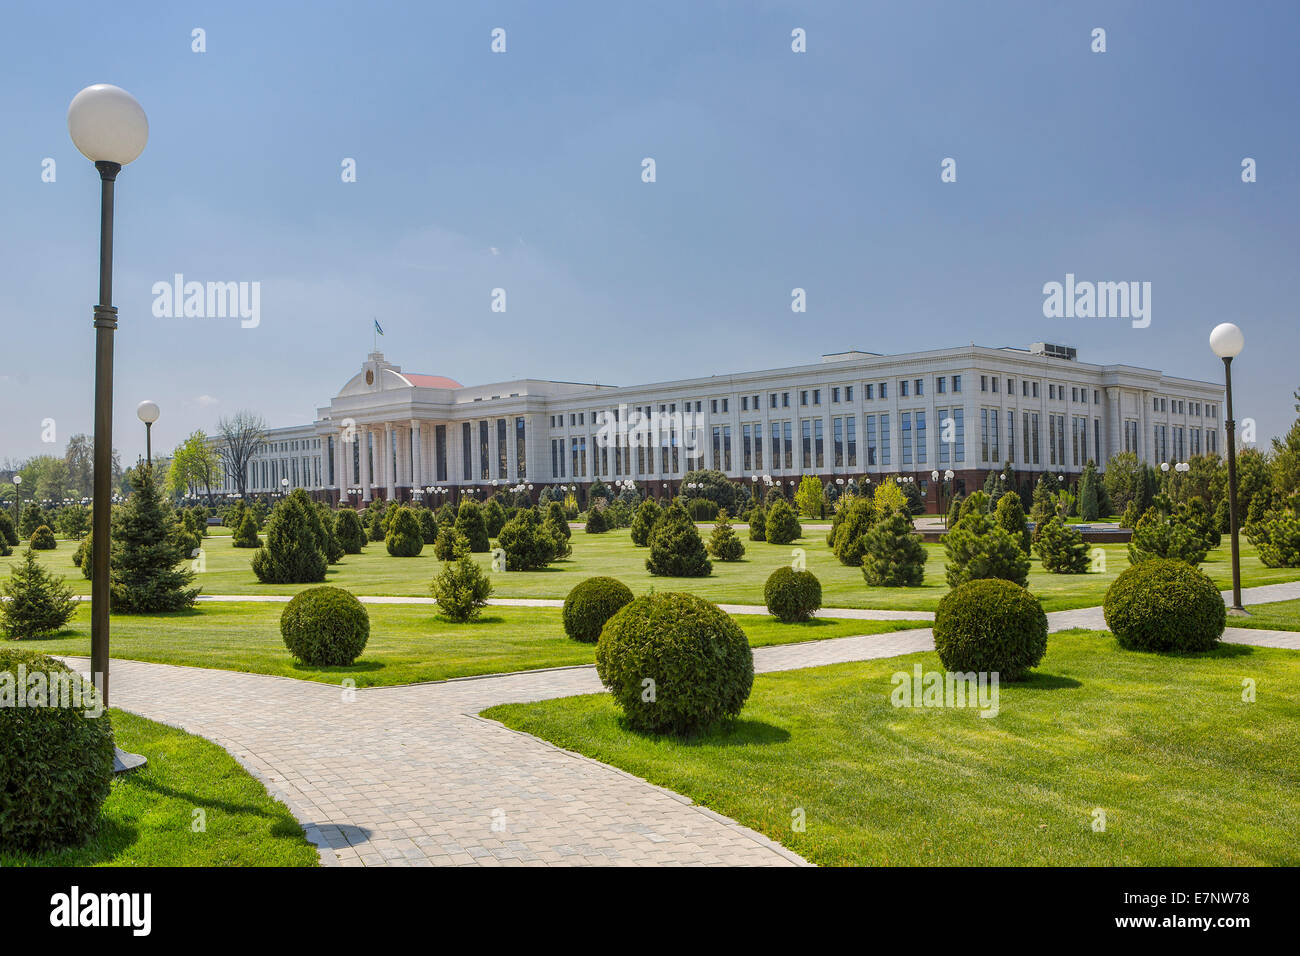 Building, Council, Ministers, Senate, Tashkent, Uzbekistan, Central Asia, Asia, architecture, city, colourful, downtown, garden, Stock Photo